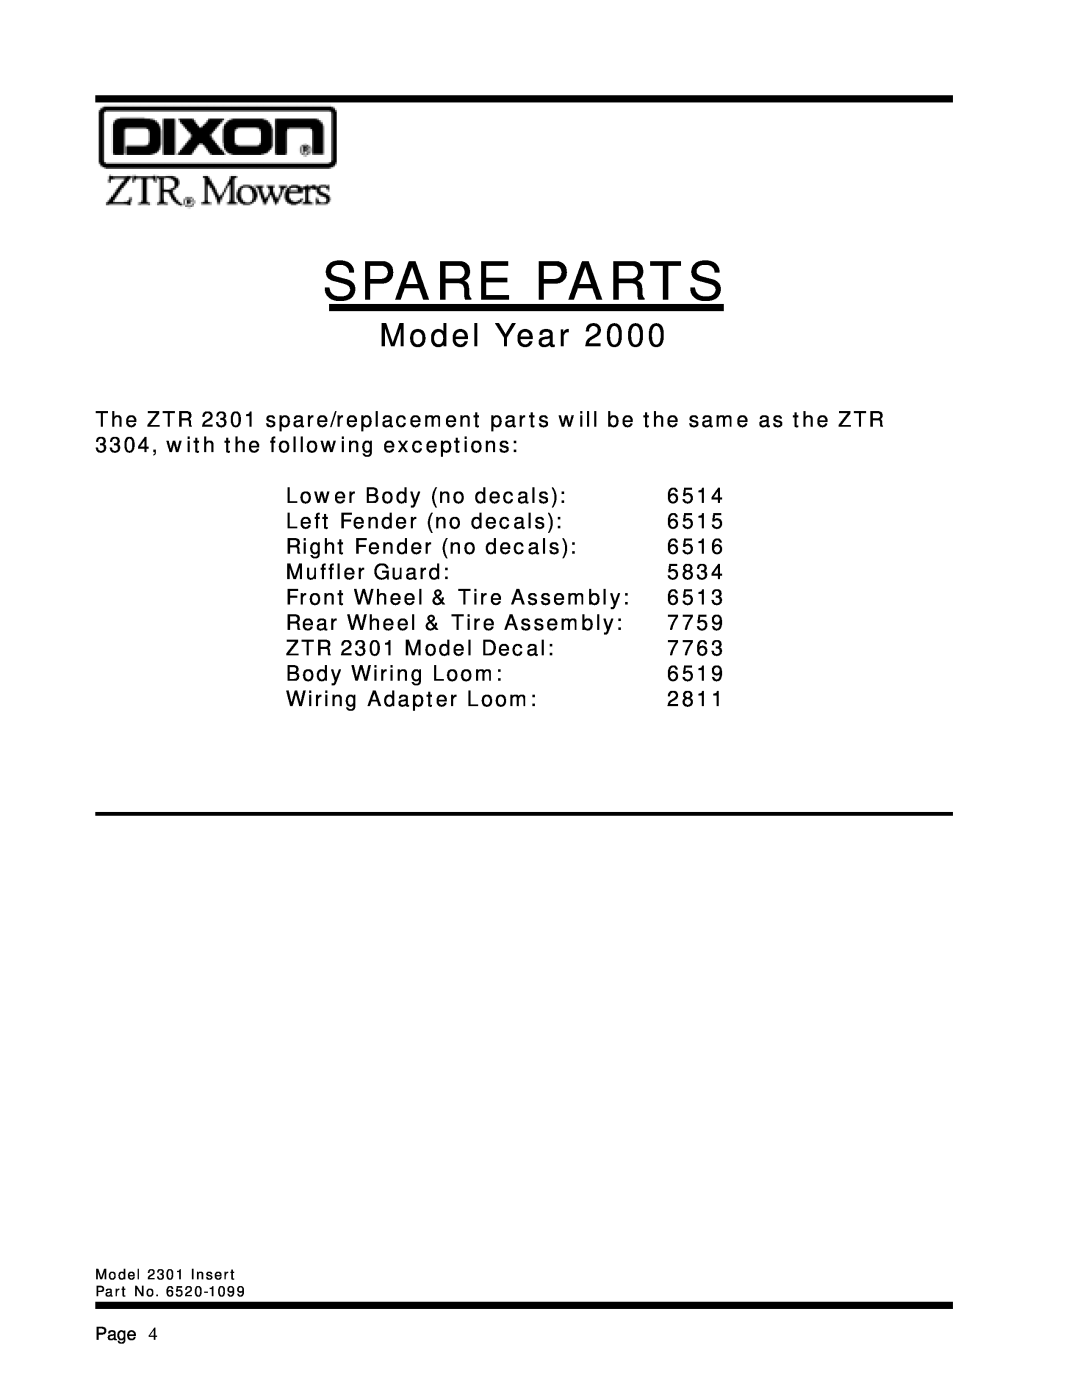 Dixon ZTR 3303, ZTR 3304, 1855-0599, 6520-1099 manual Model Year, Spare Parts 